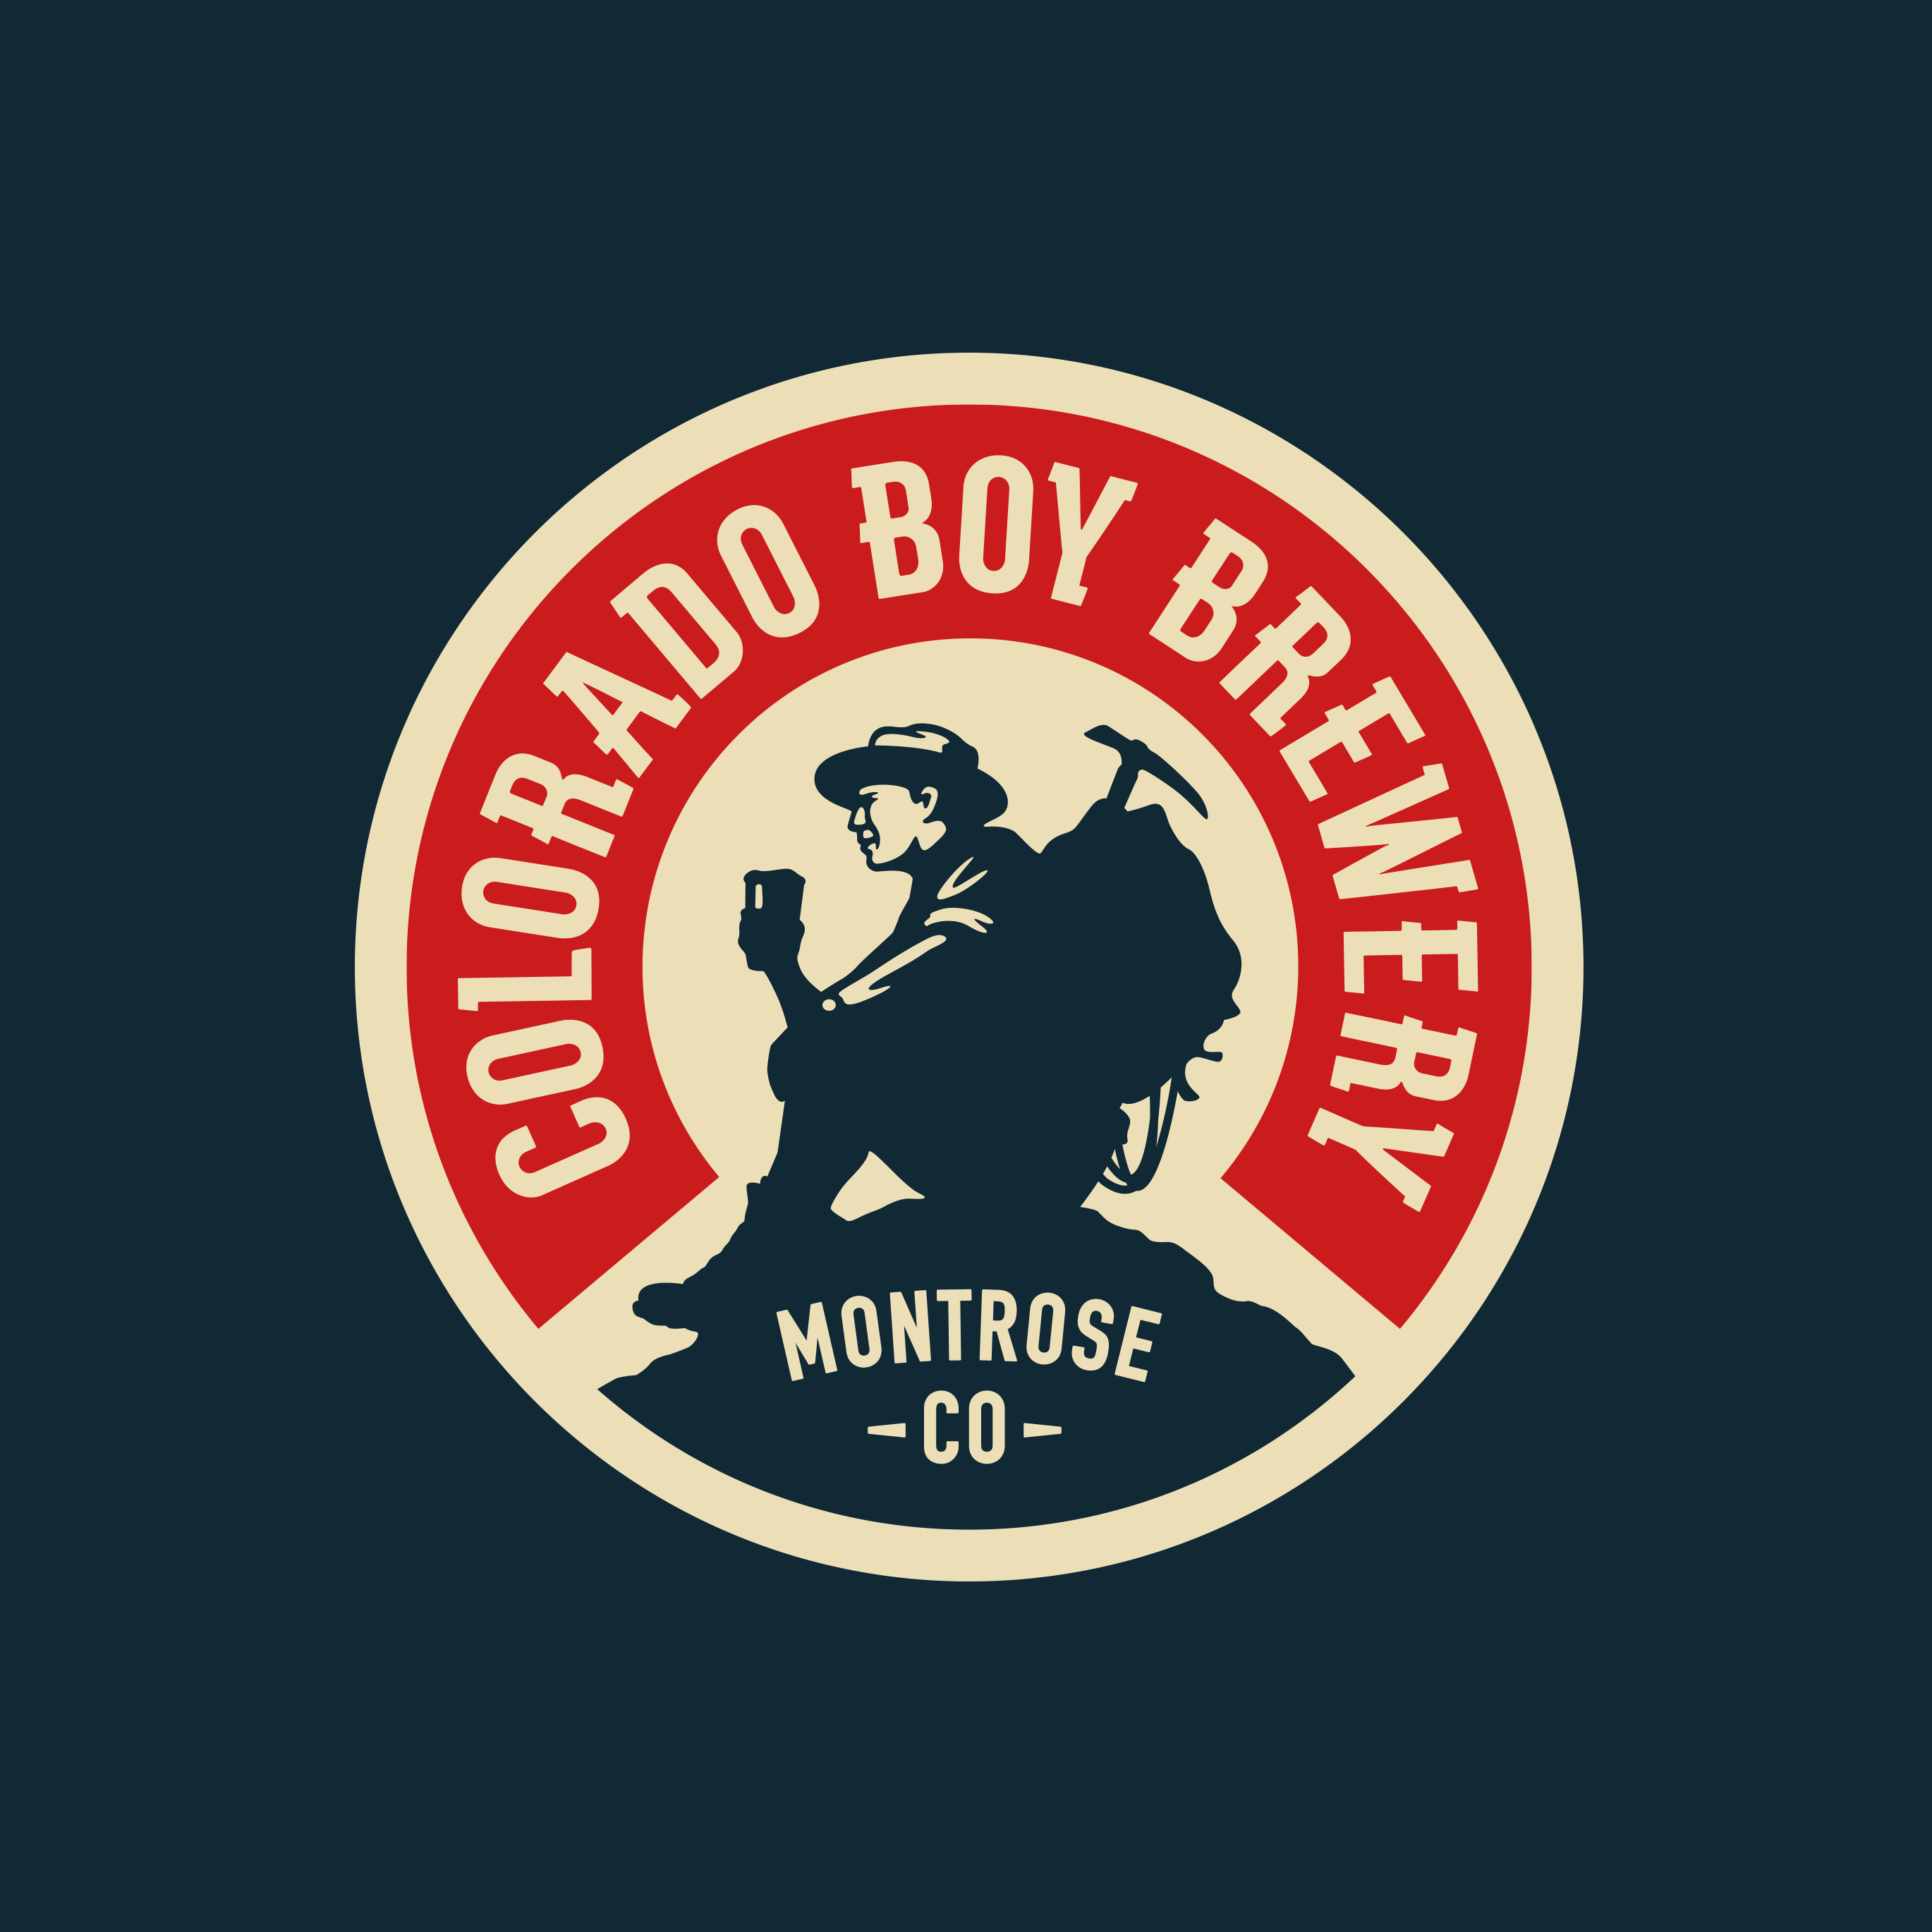 Colorado Boy Brewery Logo by Sunday Lounge